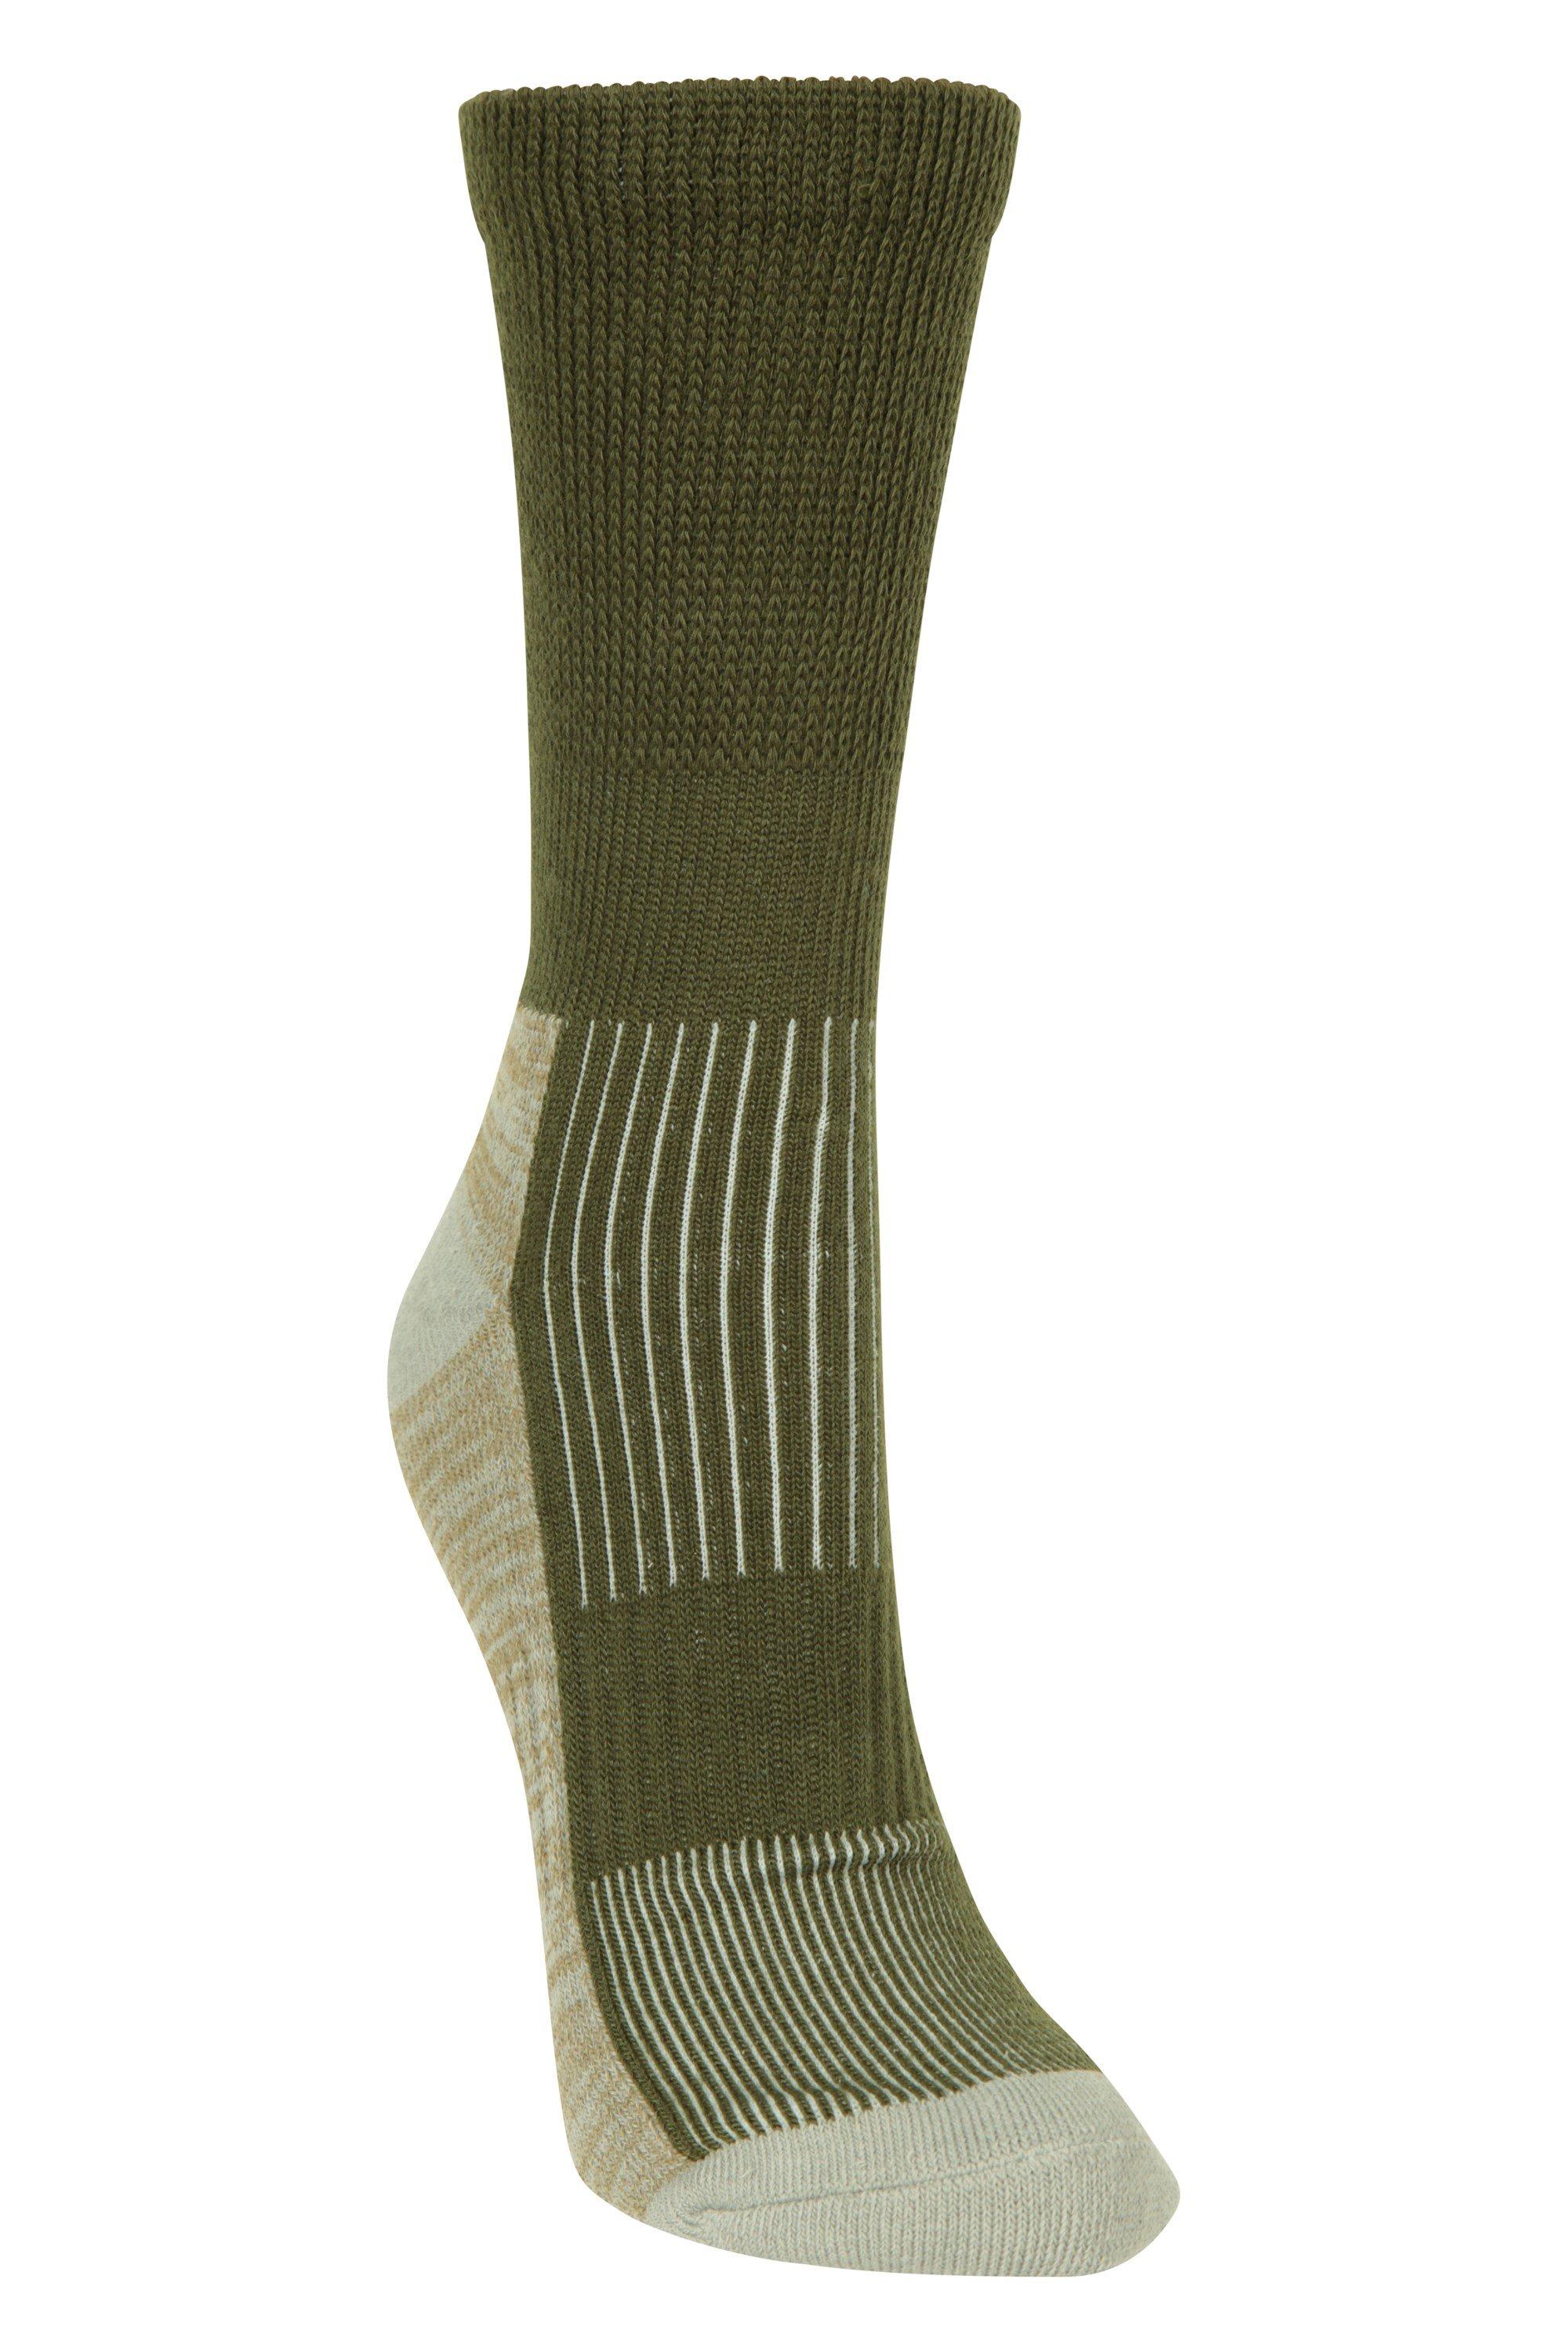 IsoCool  Hiker Sock Lightweight Durable  Socks